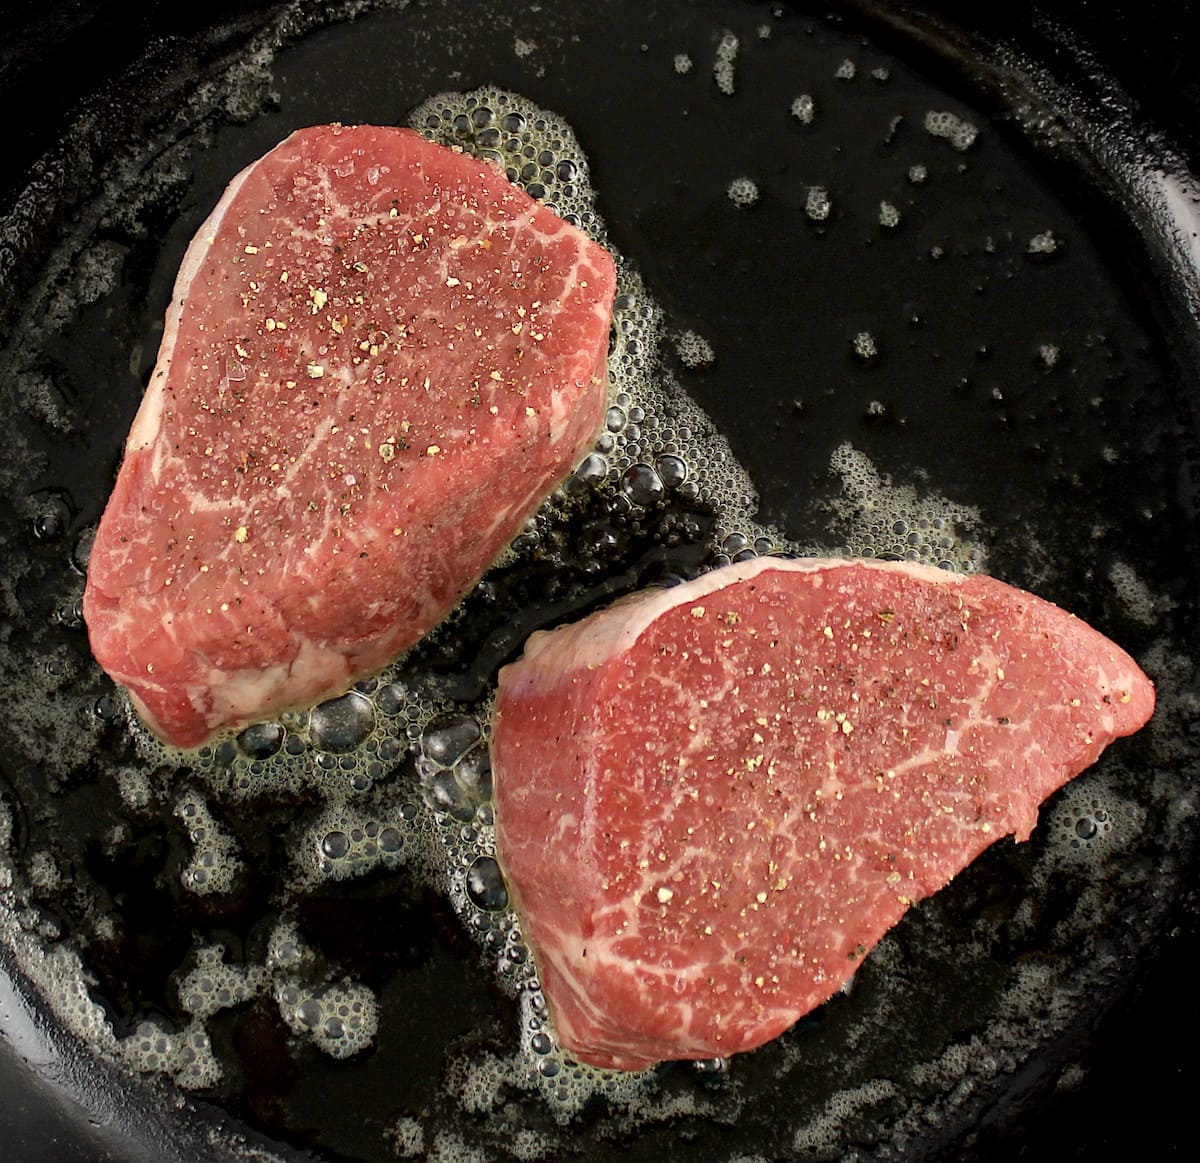 2 filet mignon steaks in skillet cooking